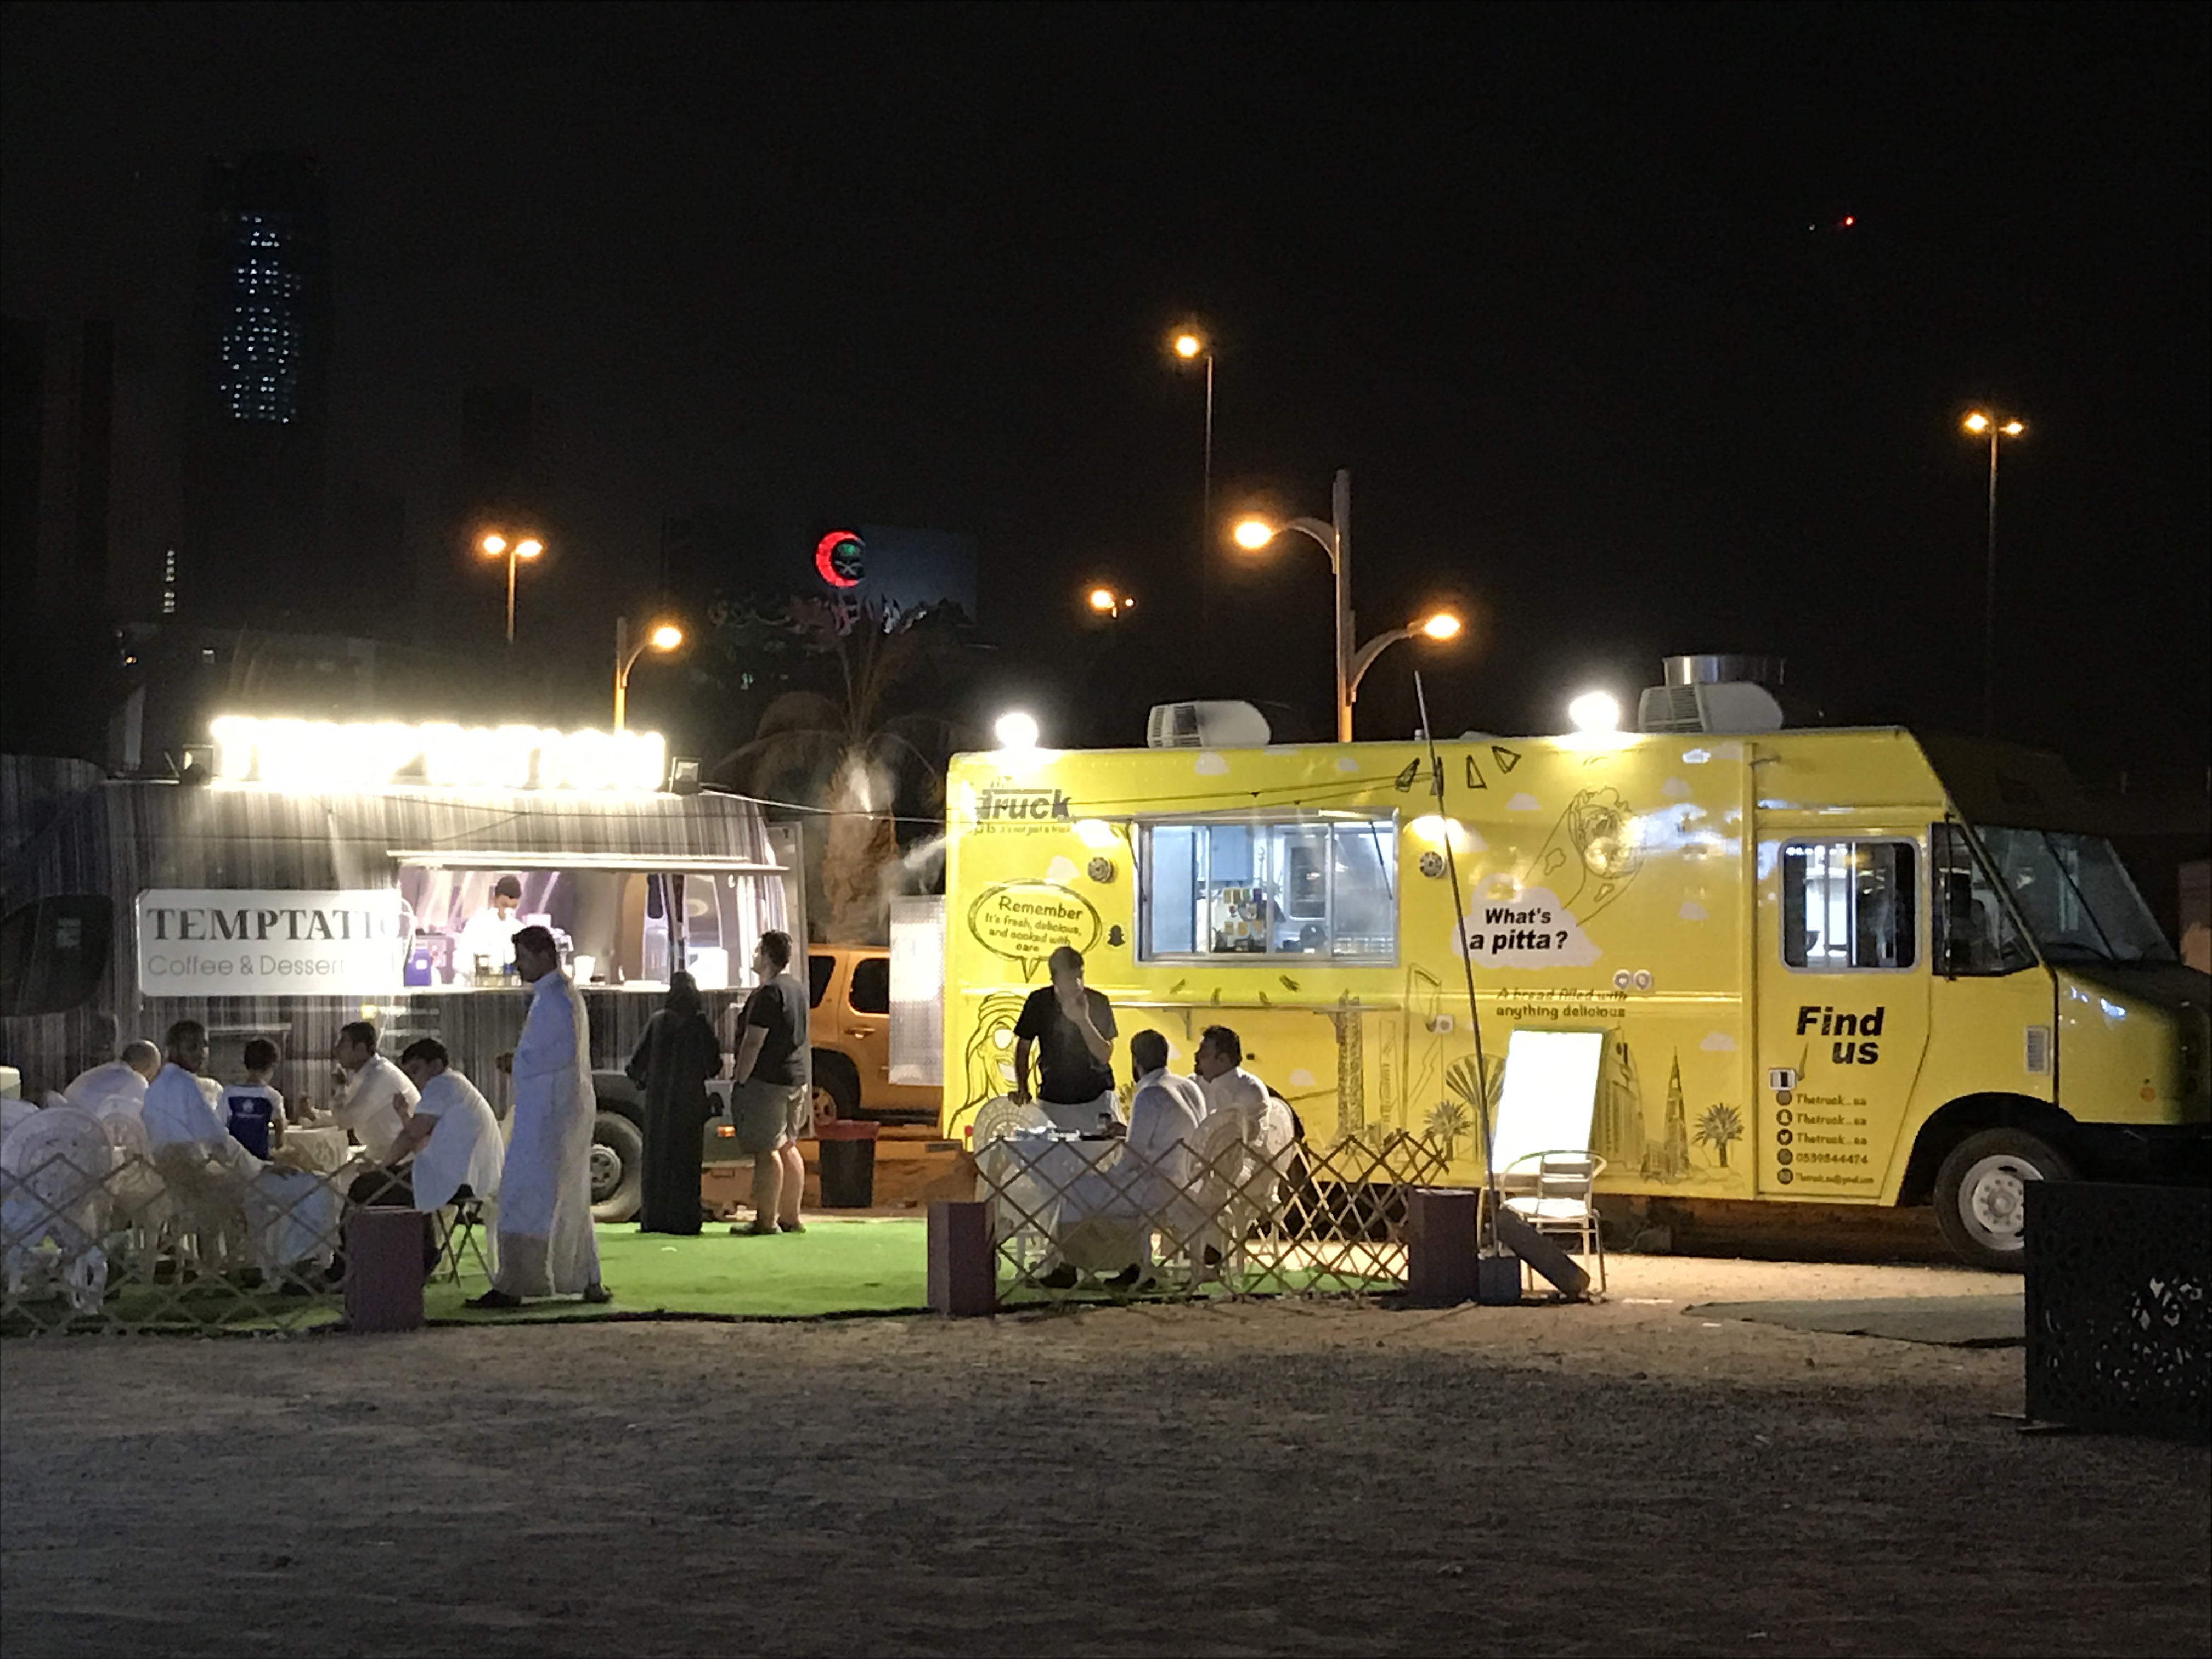 Food trucks... Growing Saudi trend in Riyadh